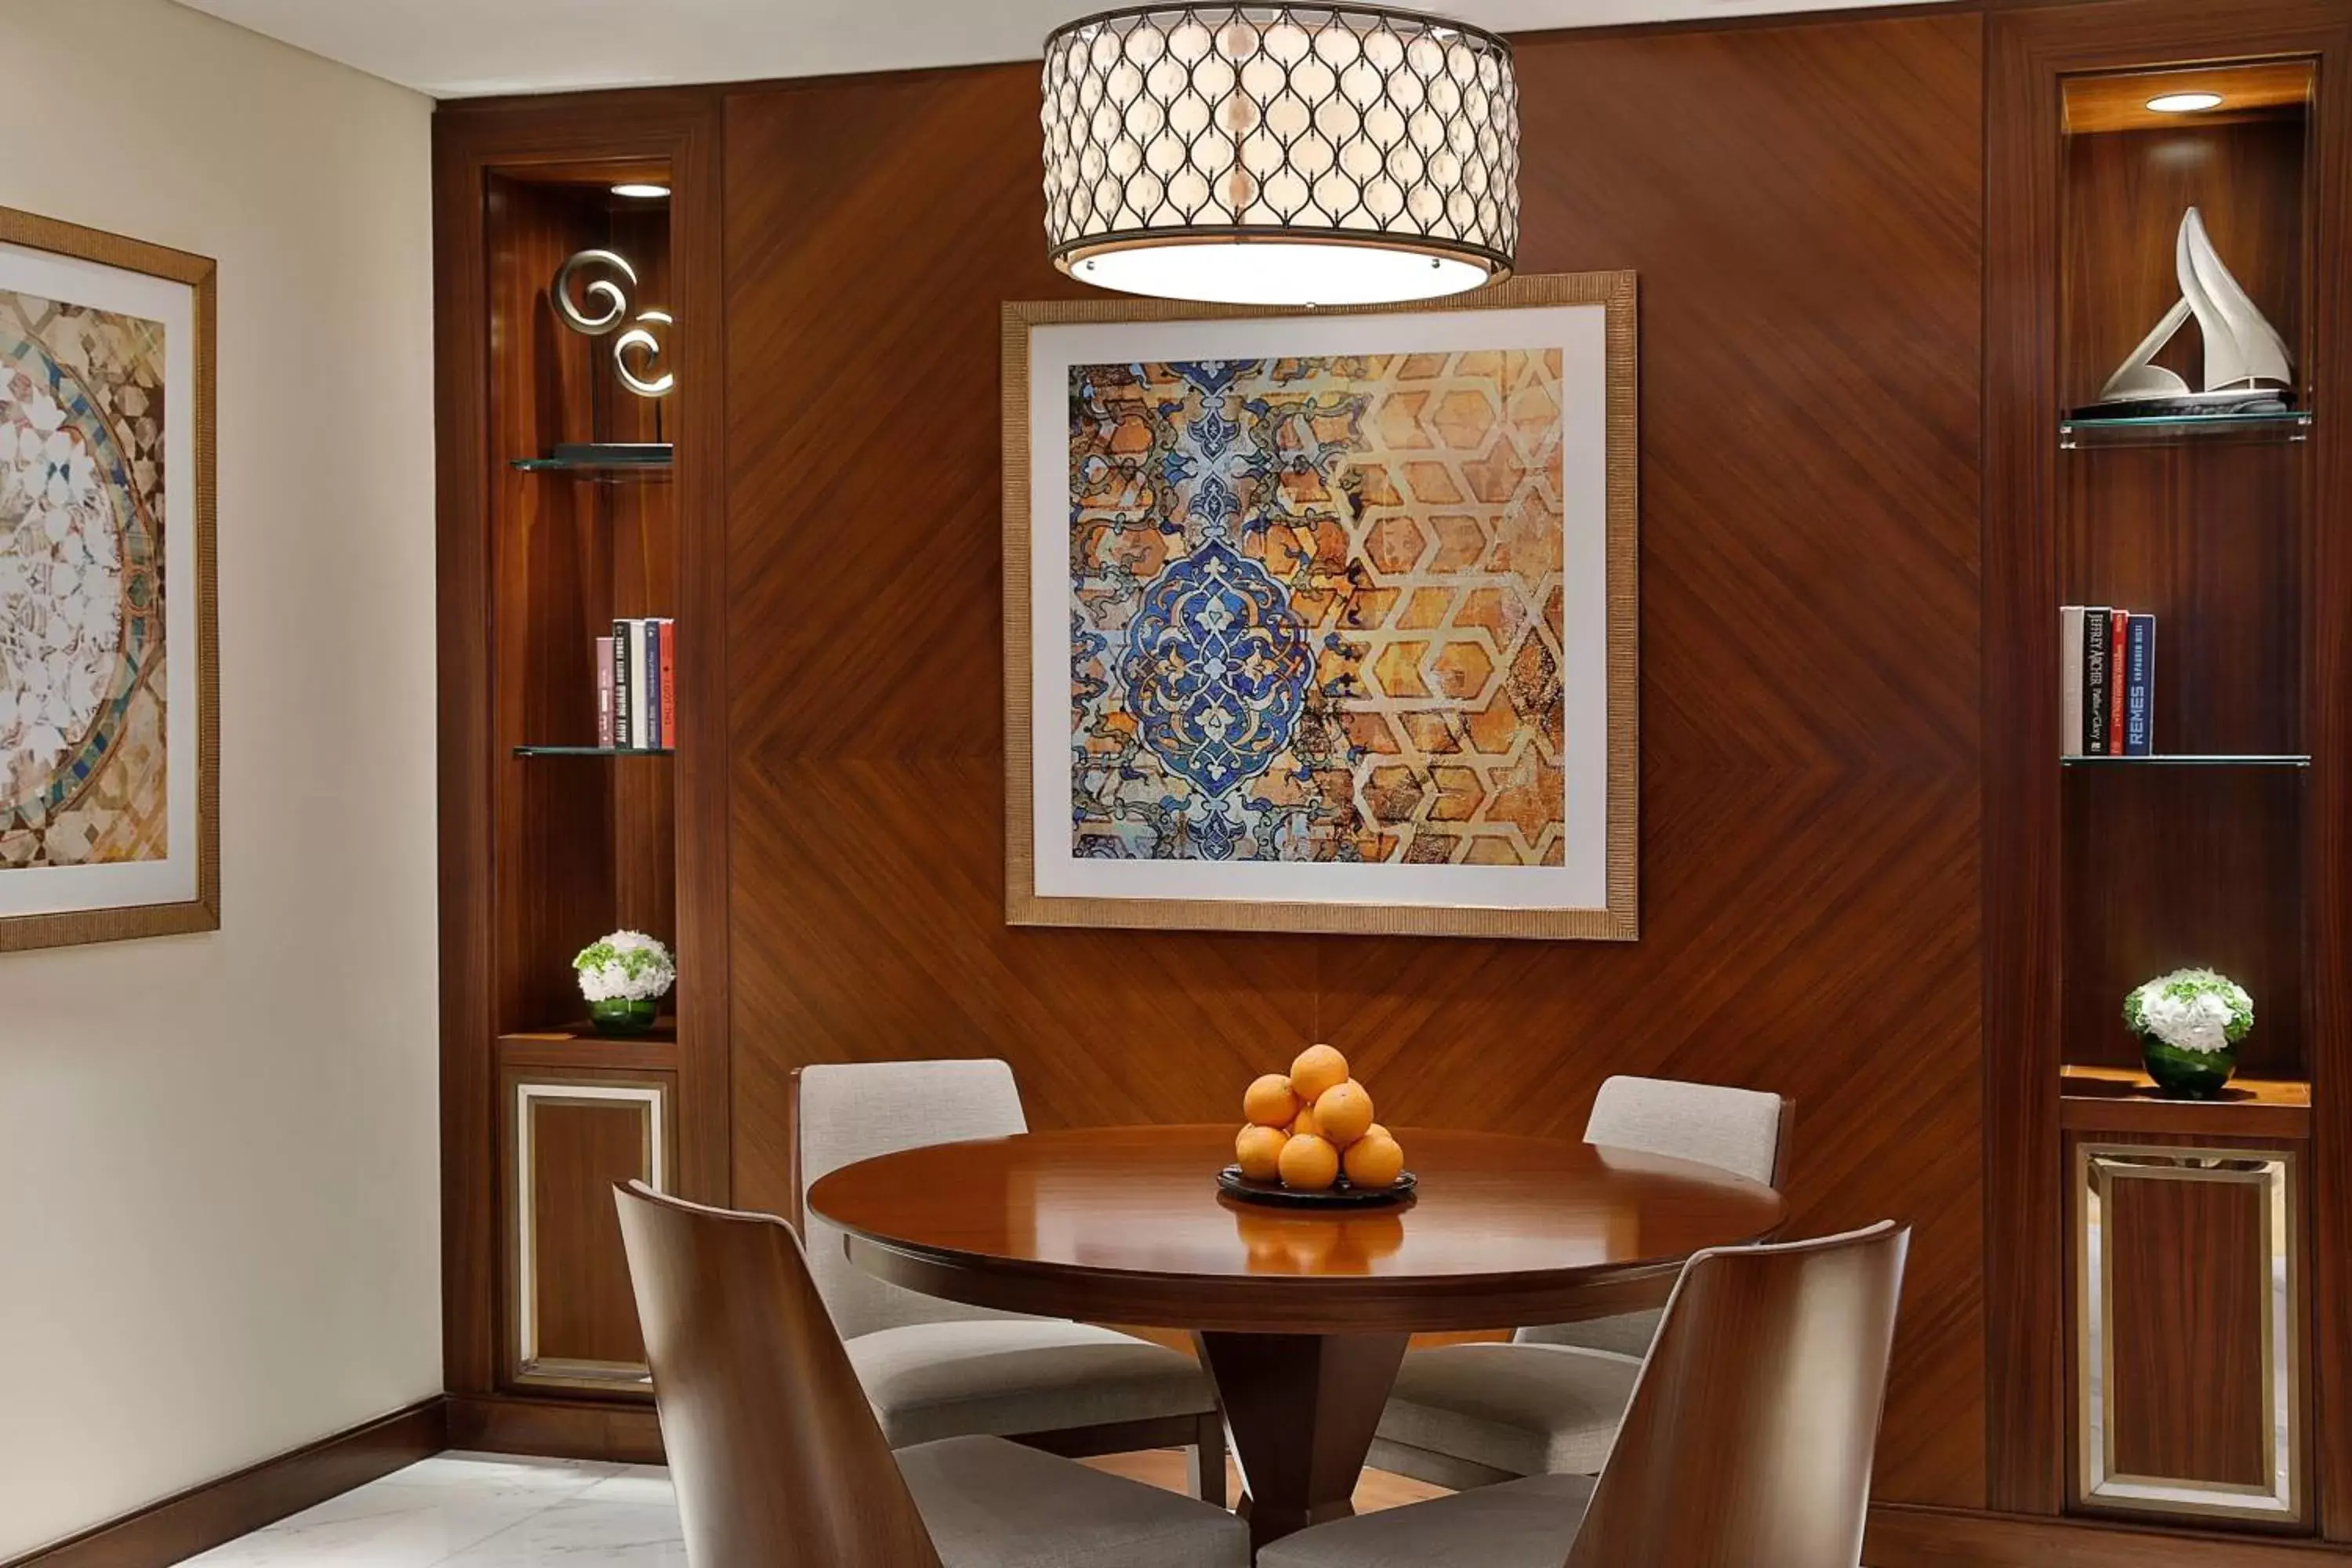 Photo of the whole room, Dining Area in The Ritz-Carlton, Dubai